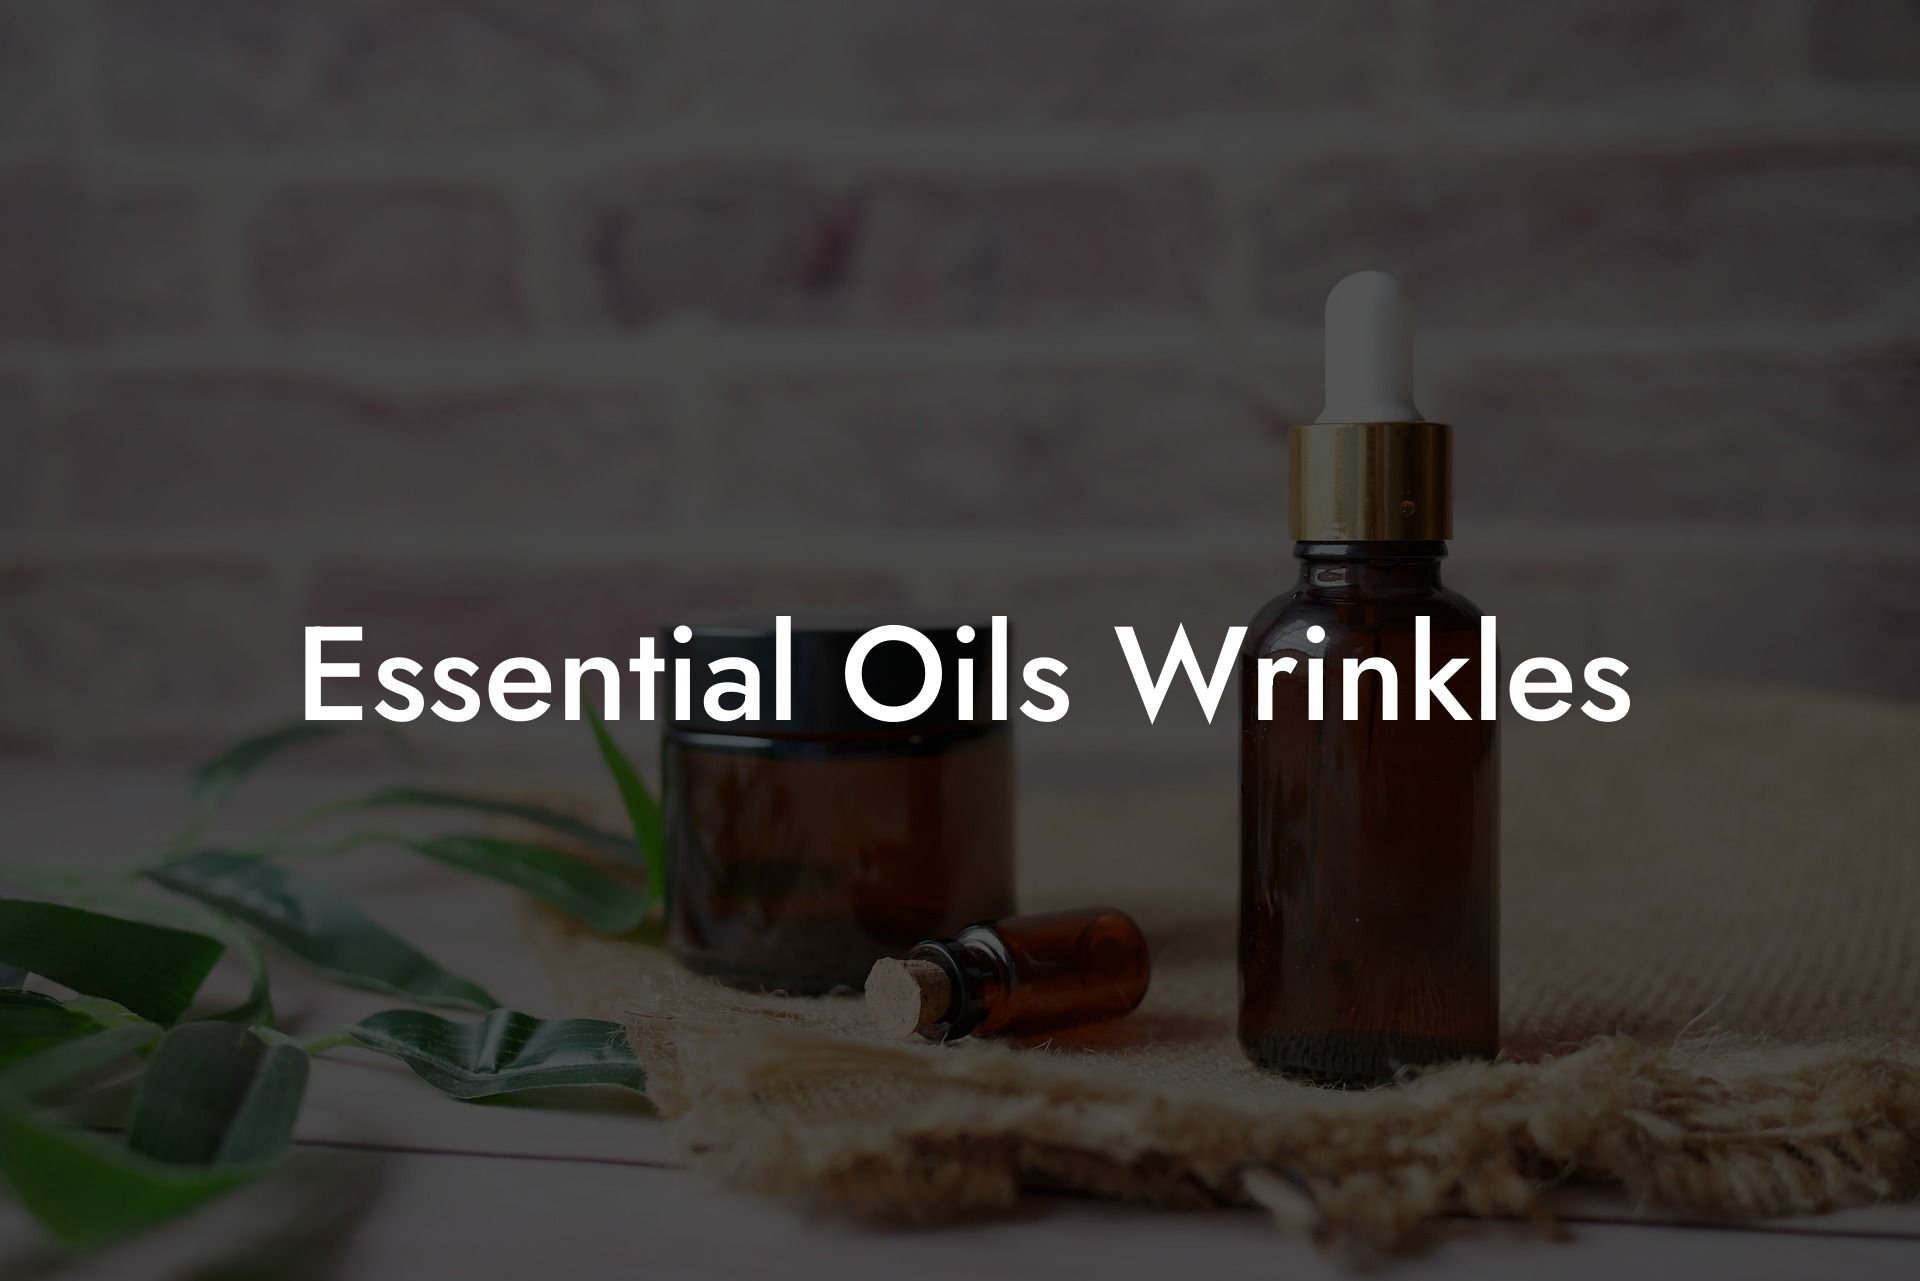 Essential Oils Wrinkles